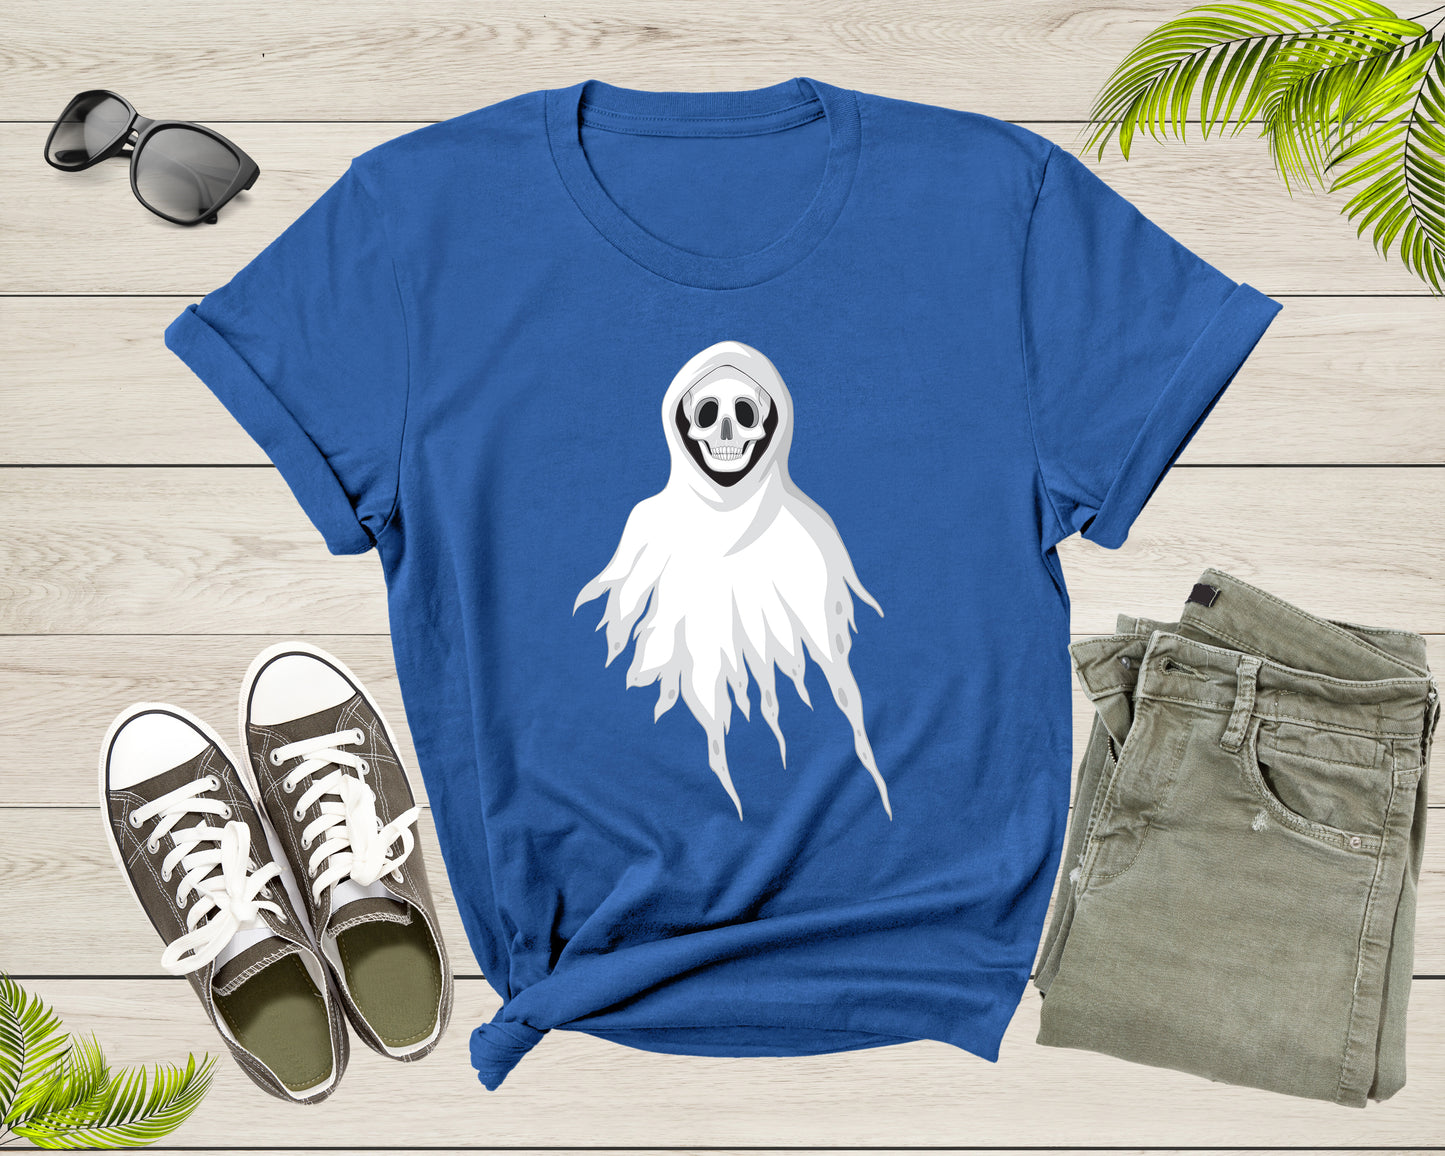 Halloween Ghost Lover Gift Men Women Kids Boys Girls Present T-Shirt Cool Spooky Halloween Lover Gift T Shirt for Teens Graphic Tshirt